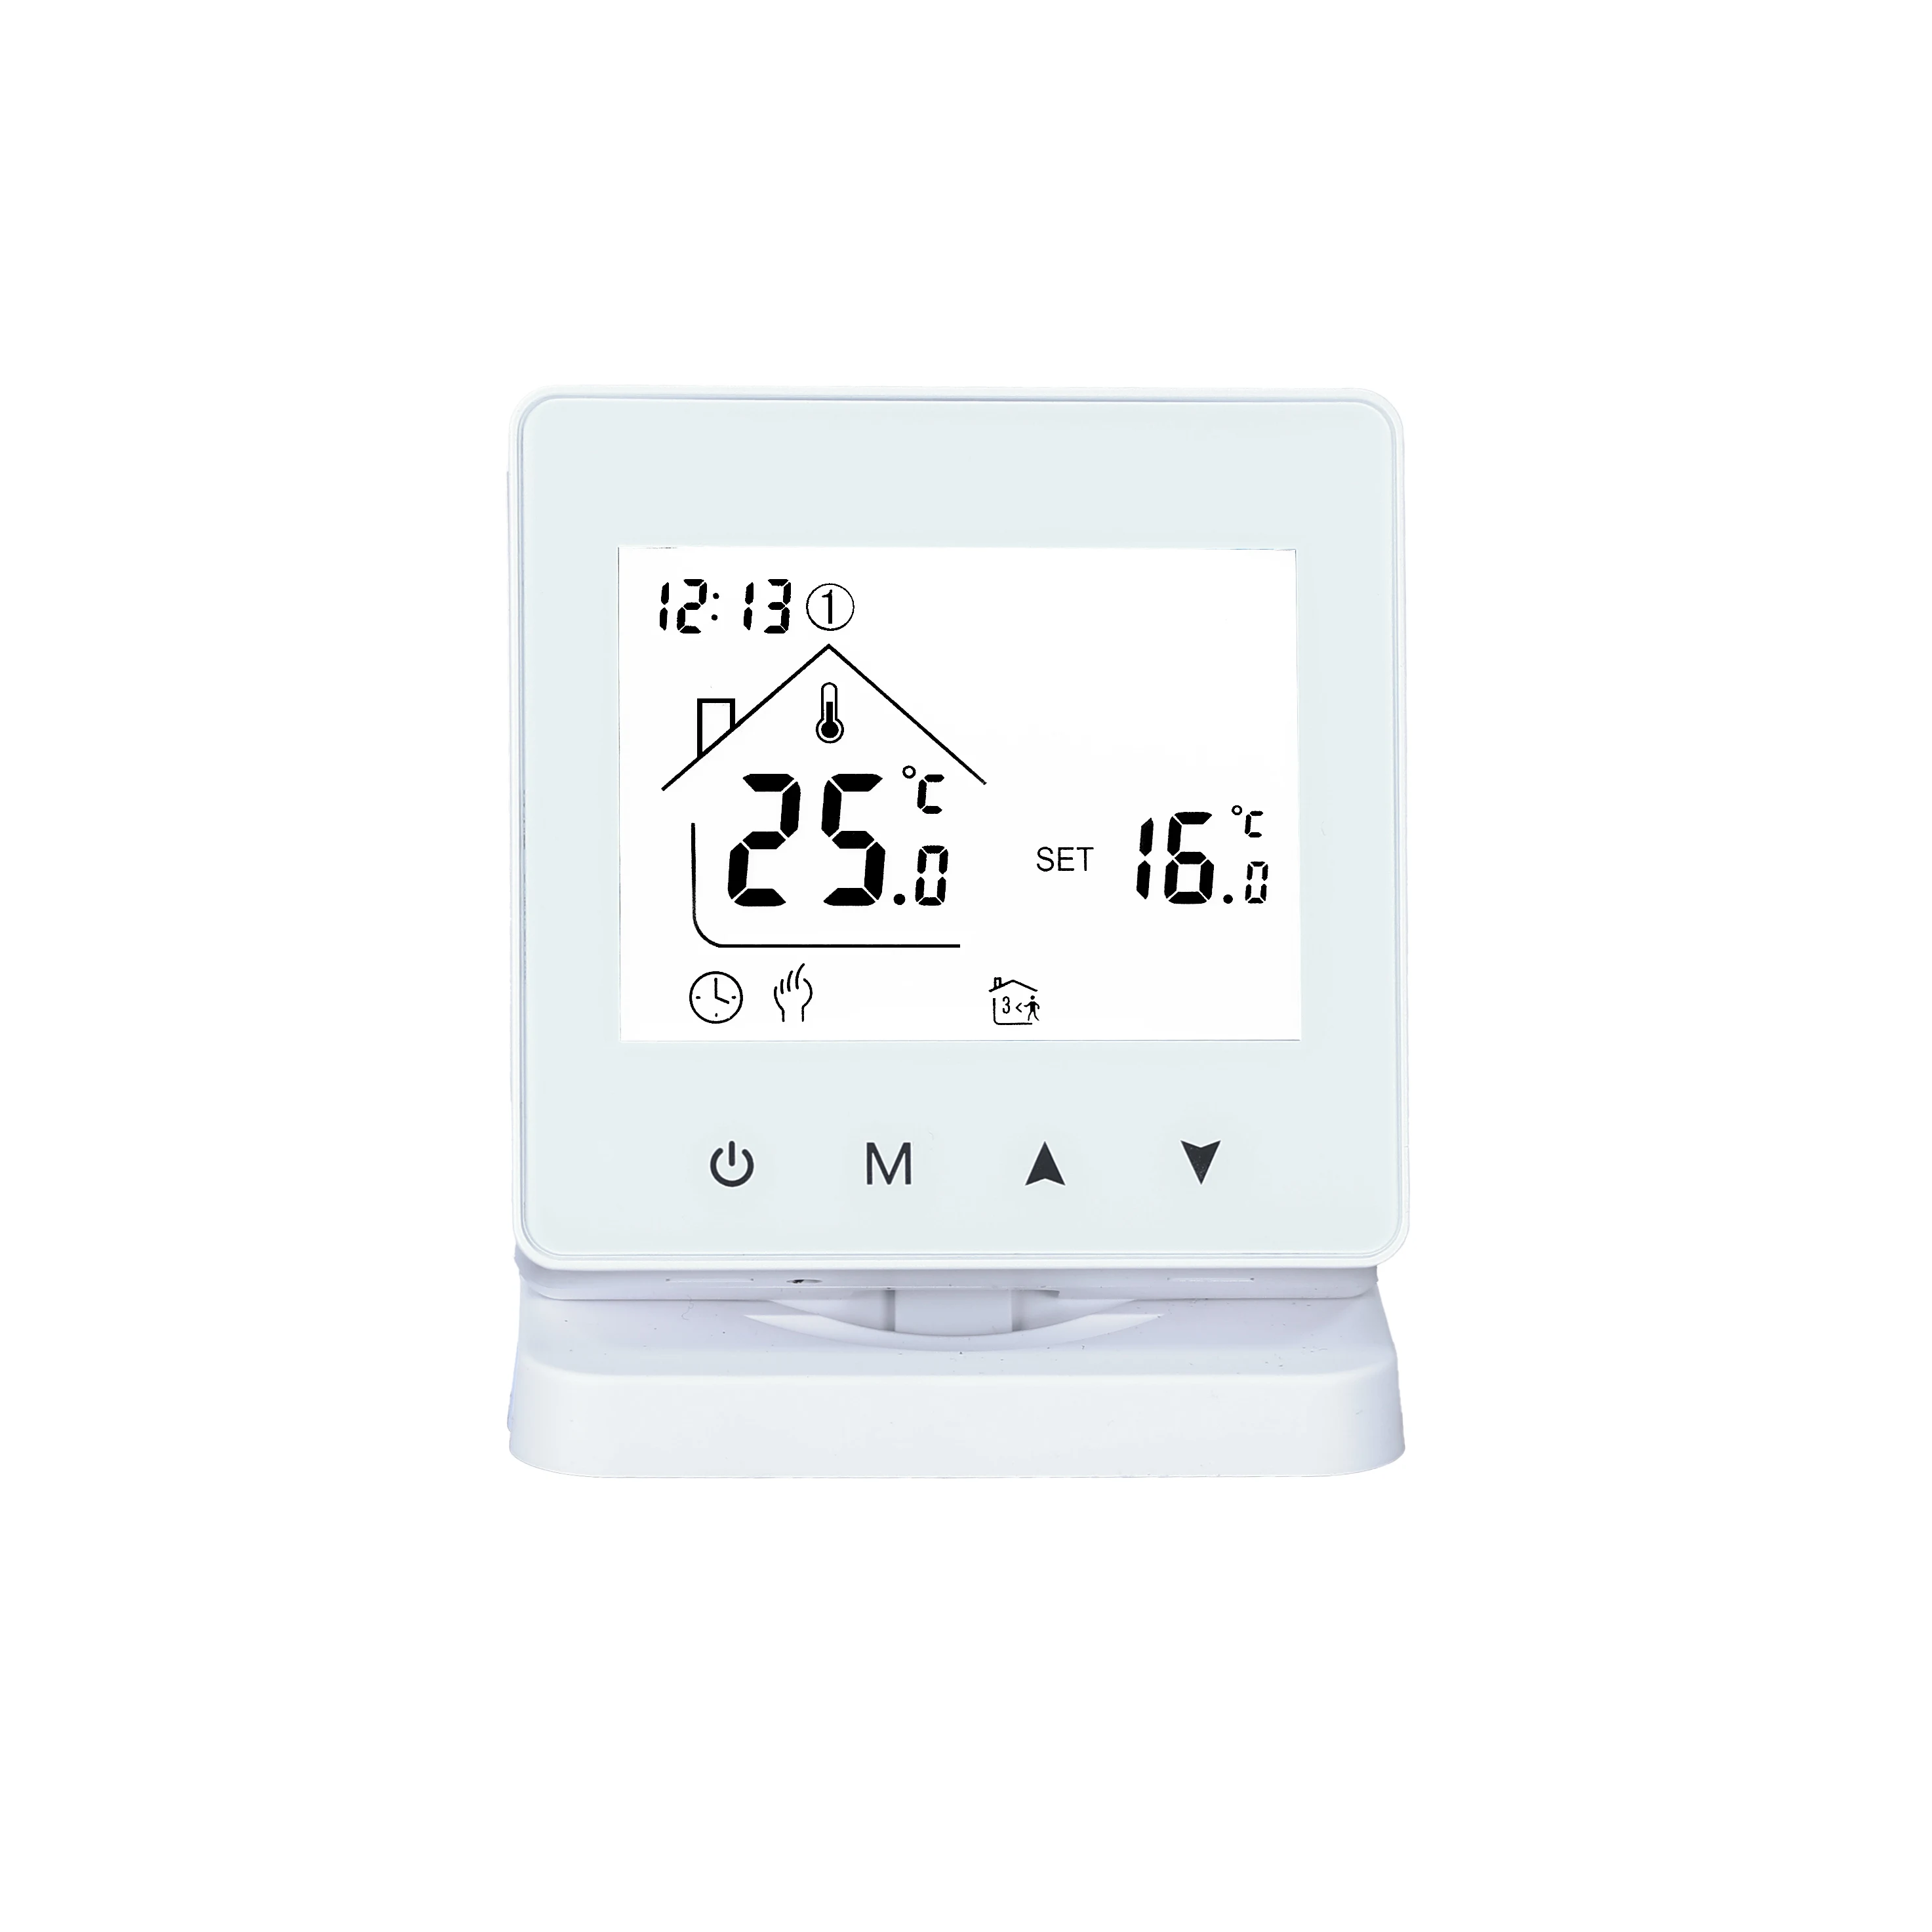 yjwl-termostato-de-calefaccion-inteligente-r9-controlador-de-temperatura-de-suelo-de-agua-conexion-0ne-on-one-pantalla-lcd-pantalla-tactil